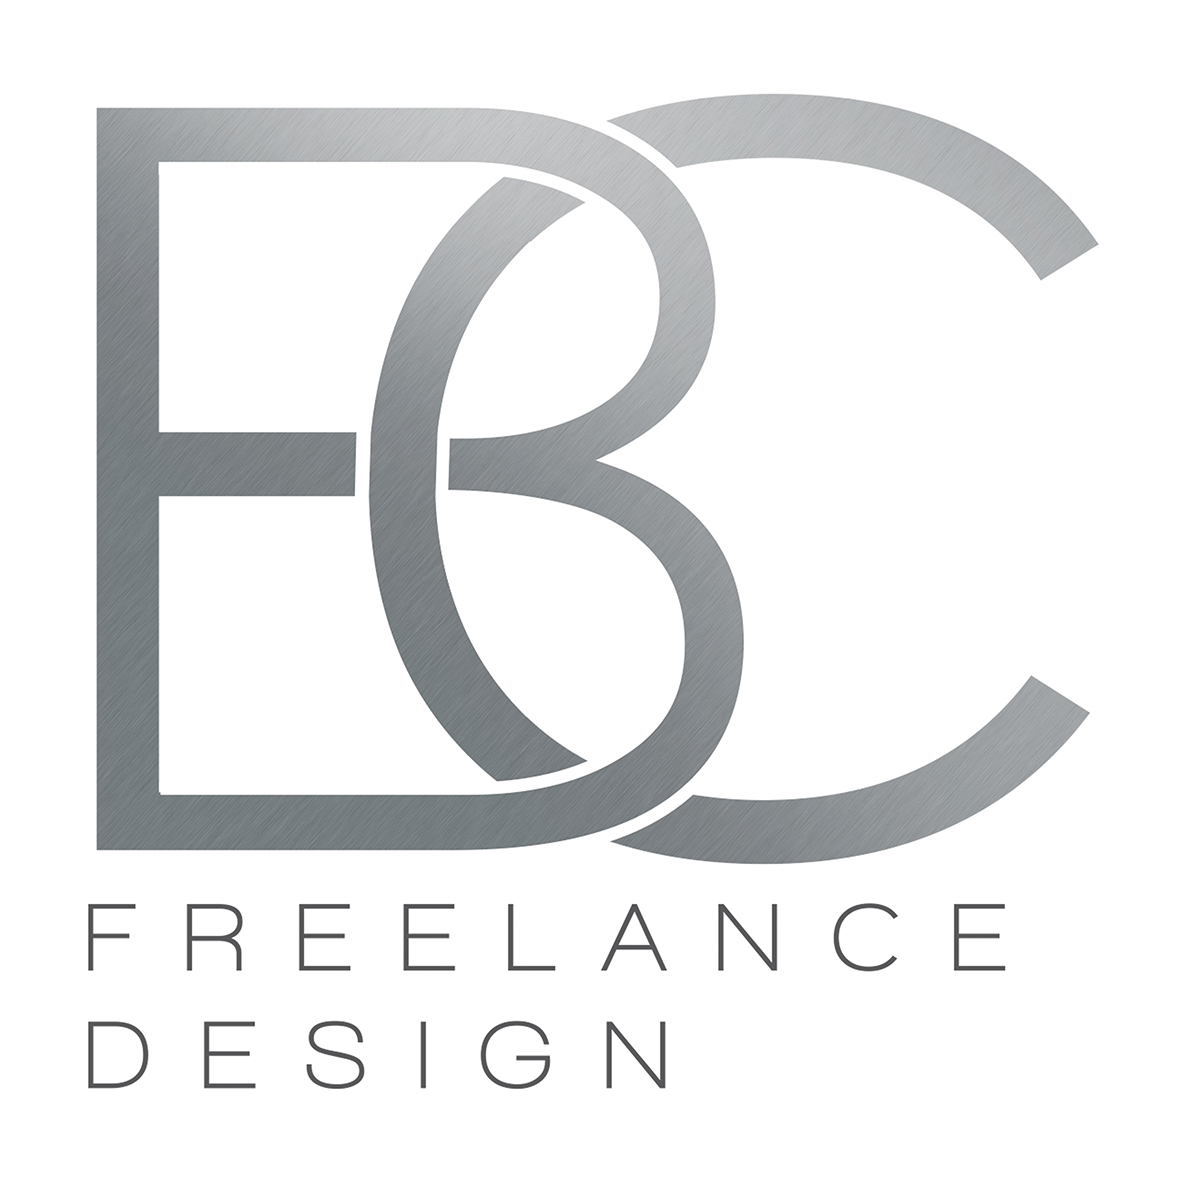 BC freelance design - Carnarvon Accommodation